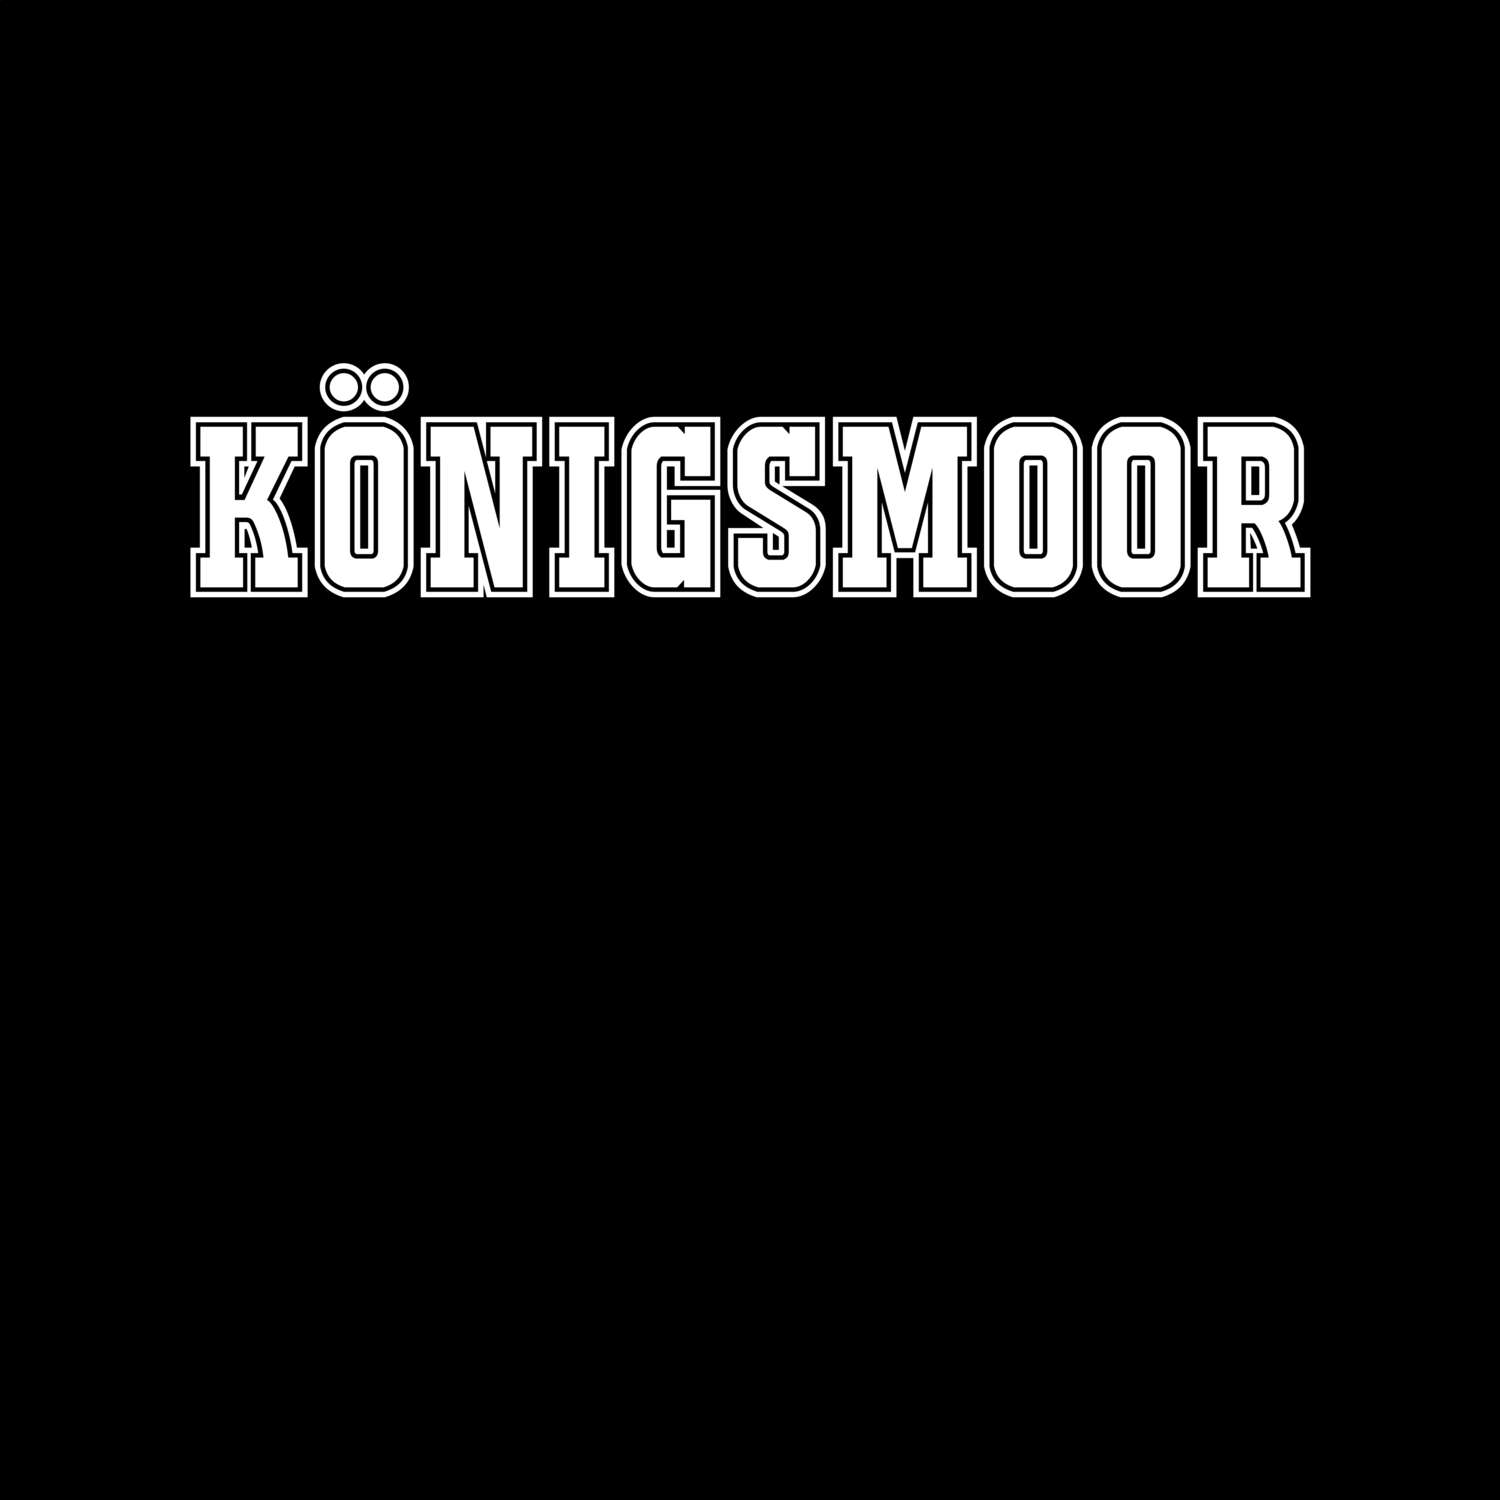 Königsmoor T-Shirt »Classic«